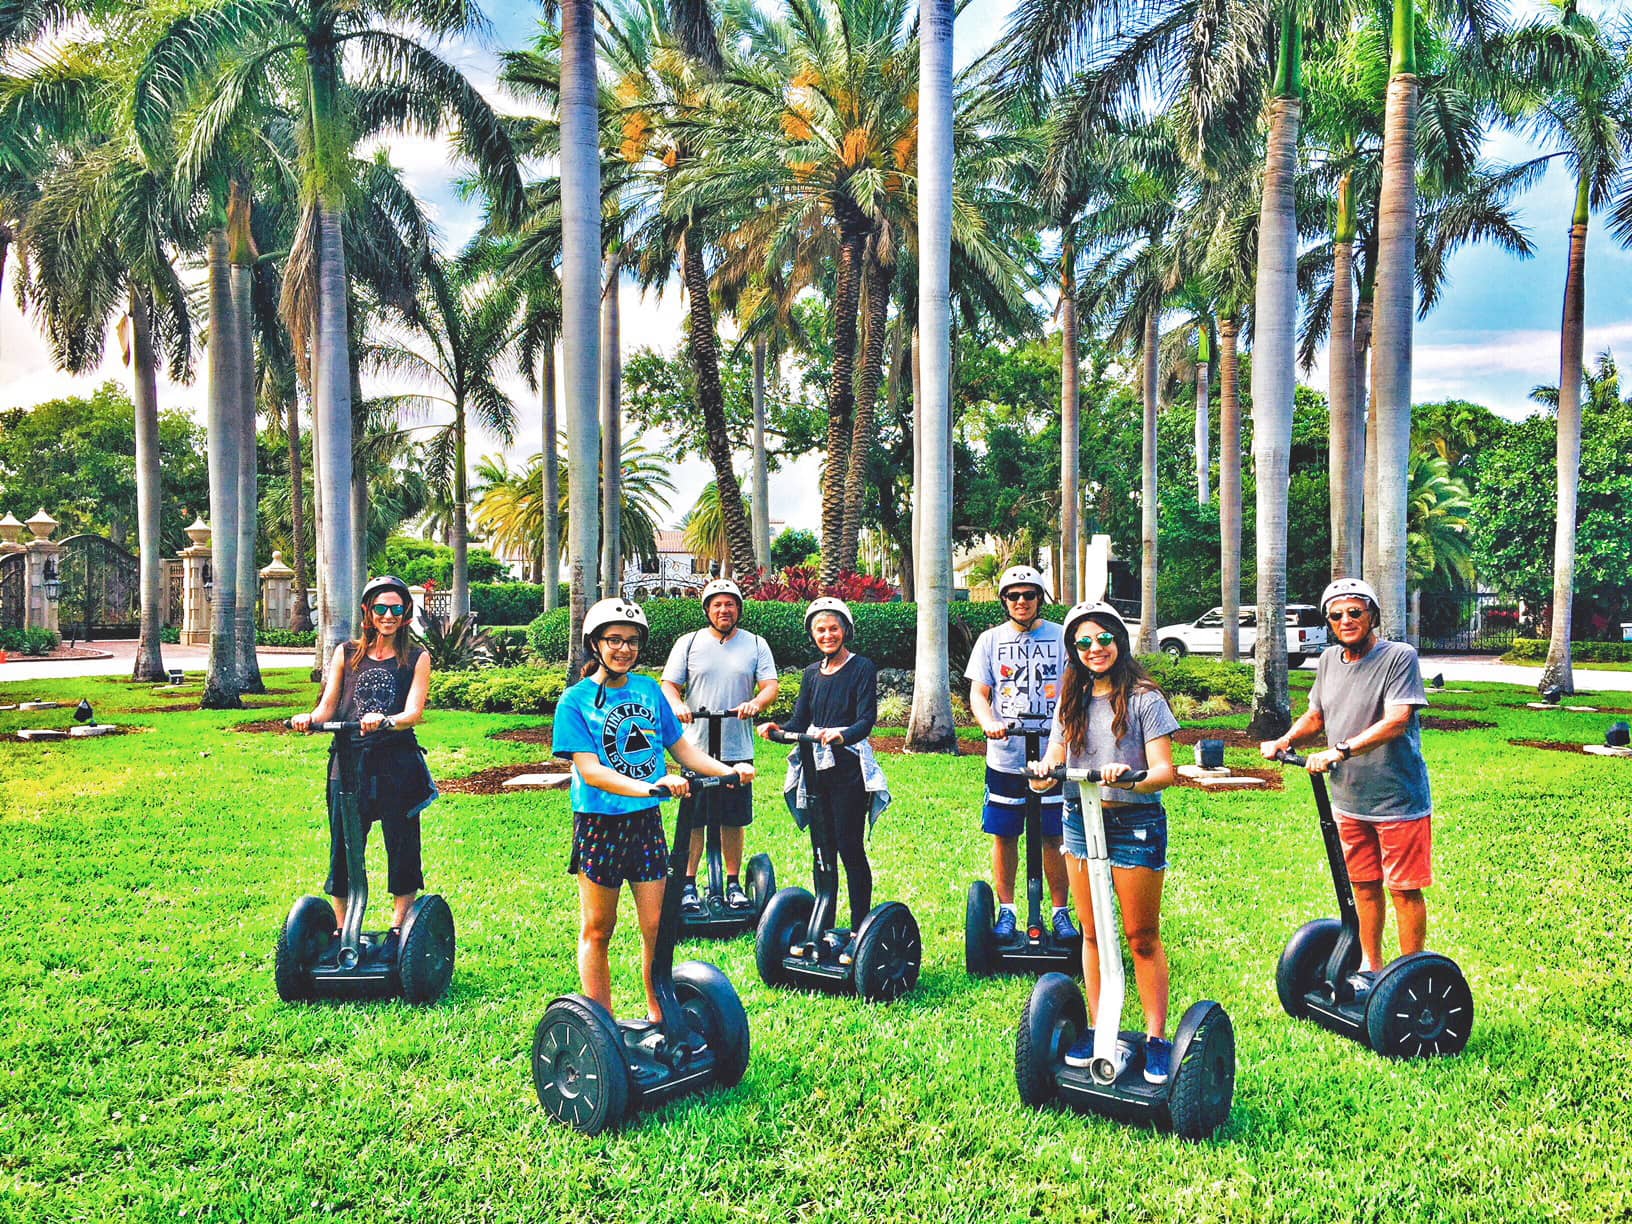 Segway riders pose on Miami's lush grass.